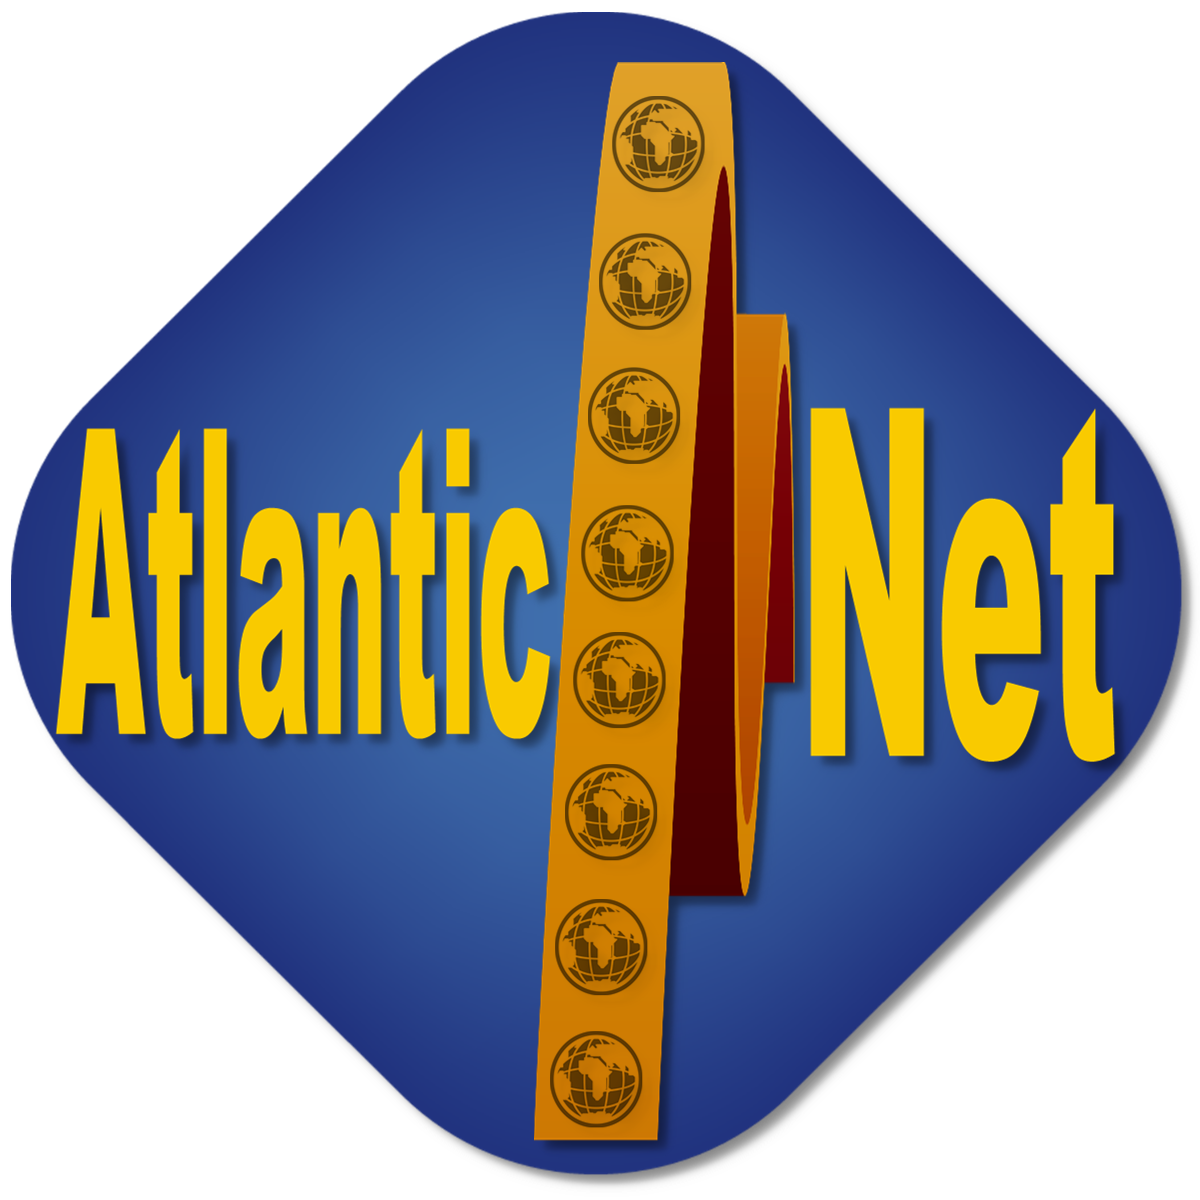 ATLANTIC NET